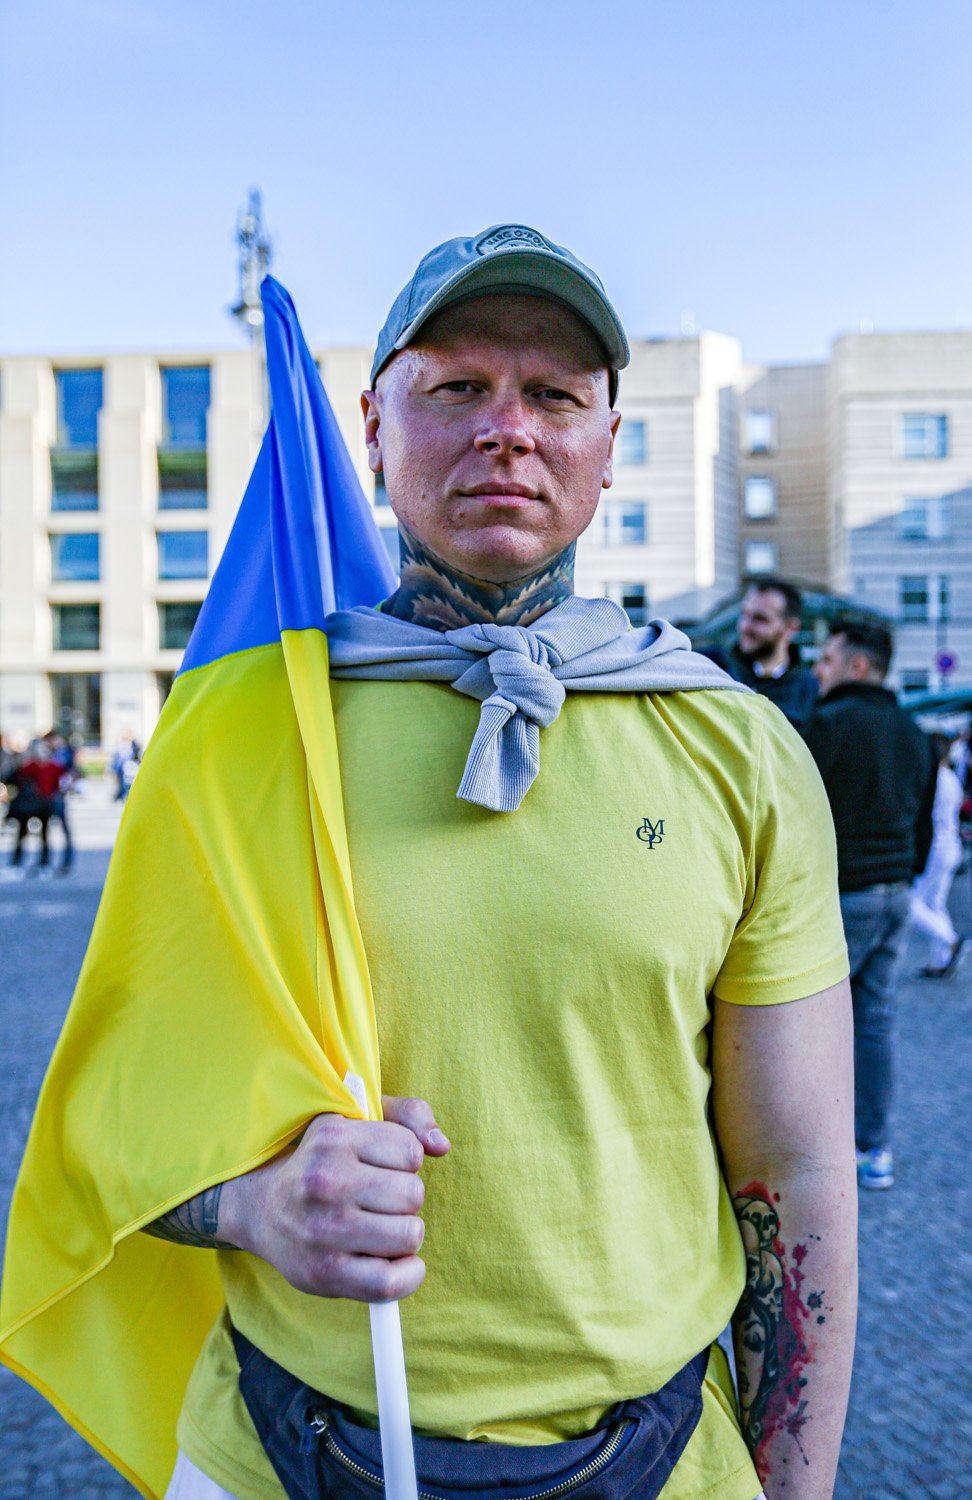 BO_UkrainianProtestBerlin_001016.jpg